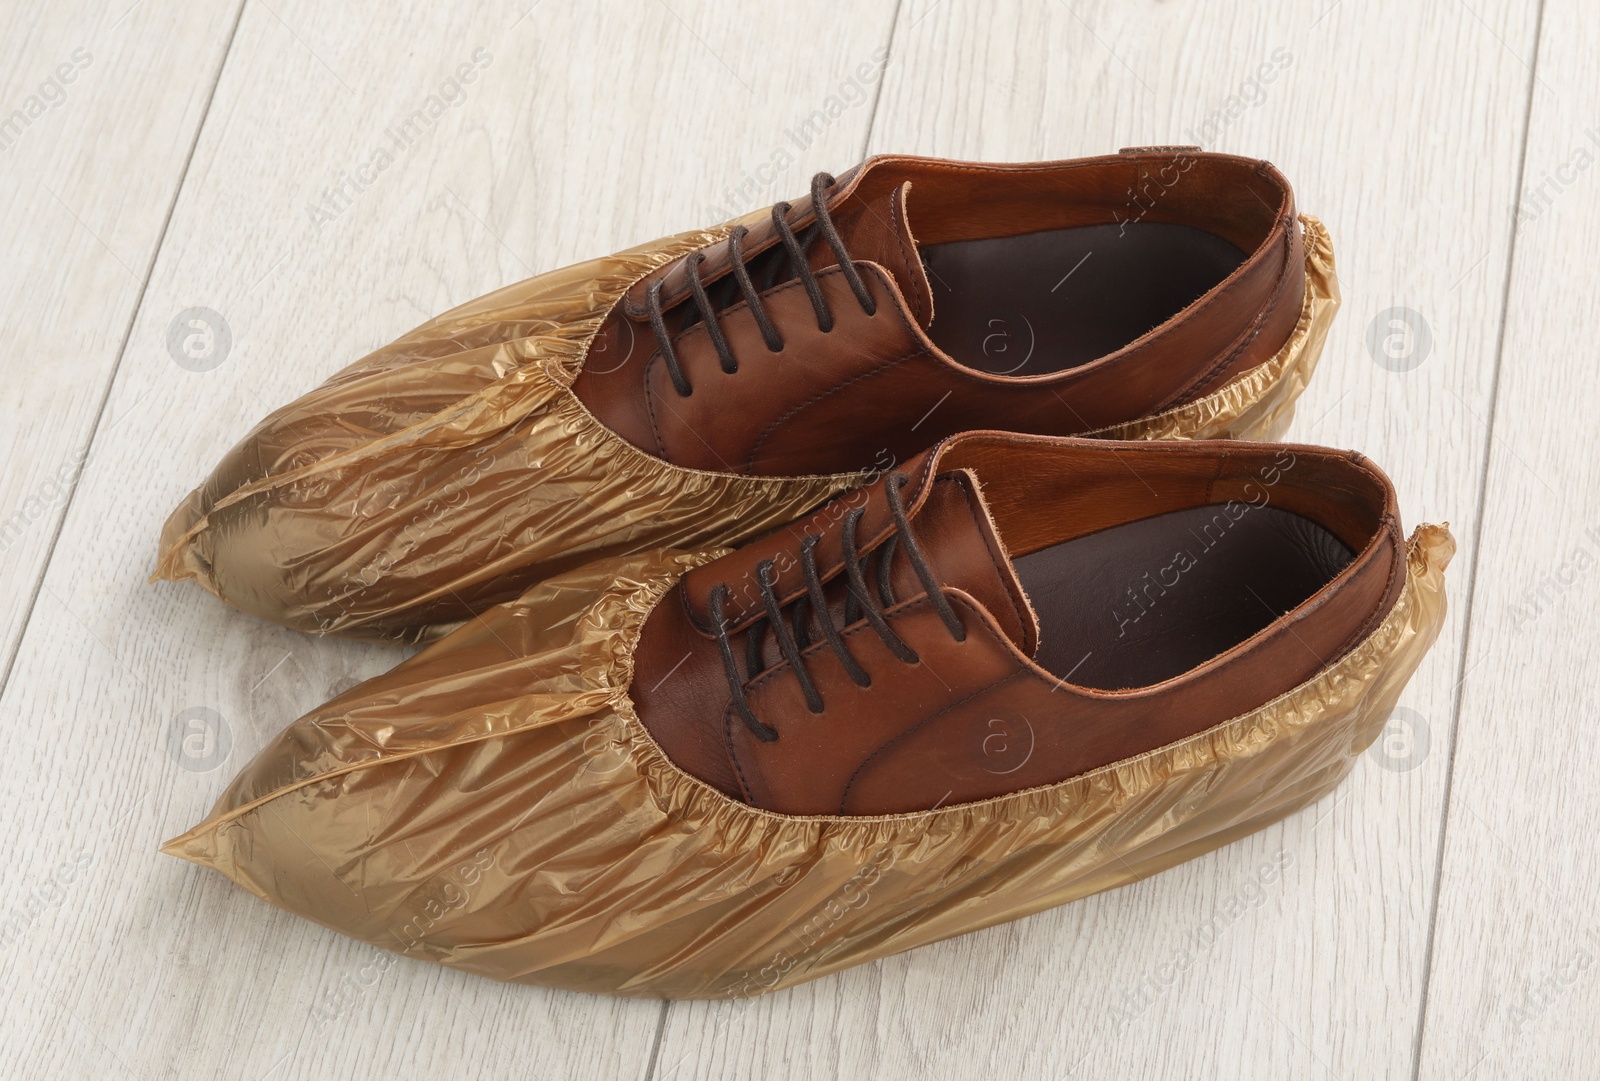 Photo of Men`s shoes in shoe covers on light wooden floor